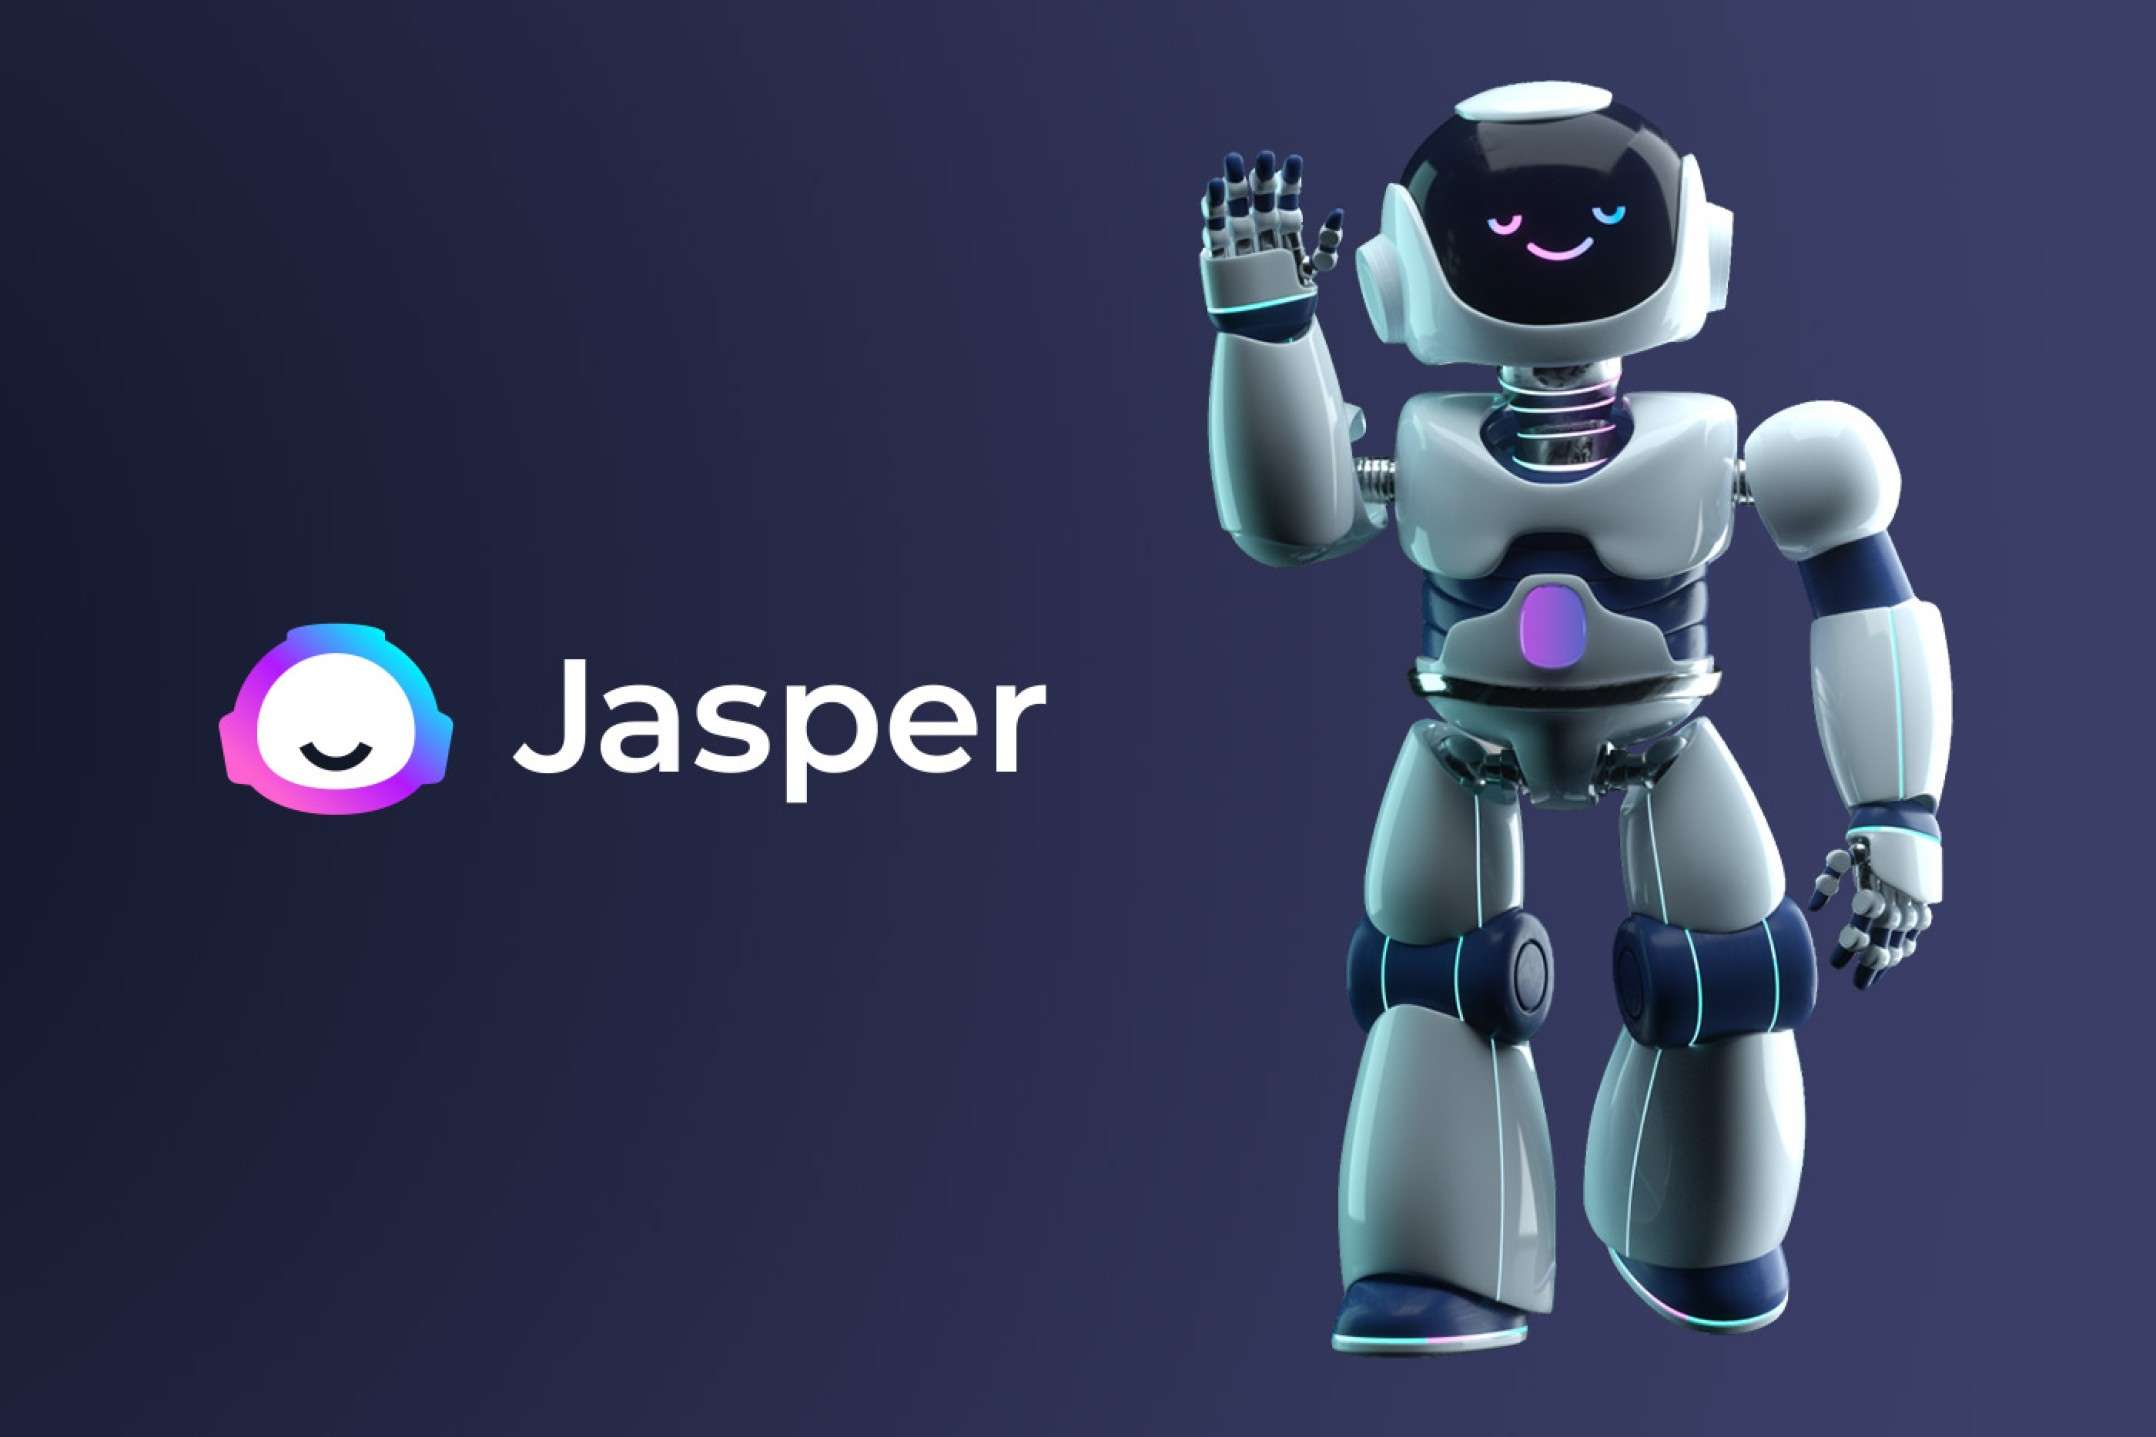 Jasper IA per copywriting